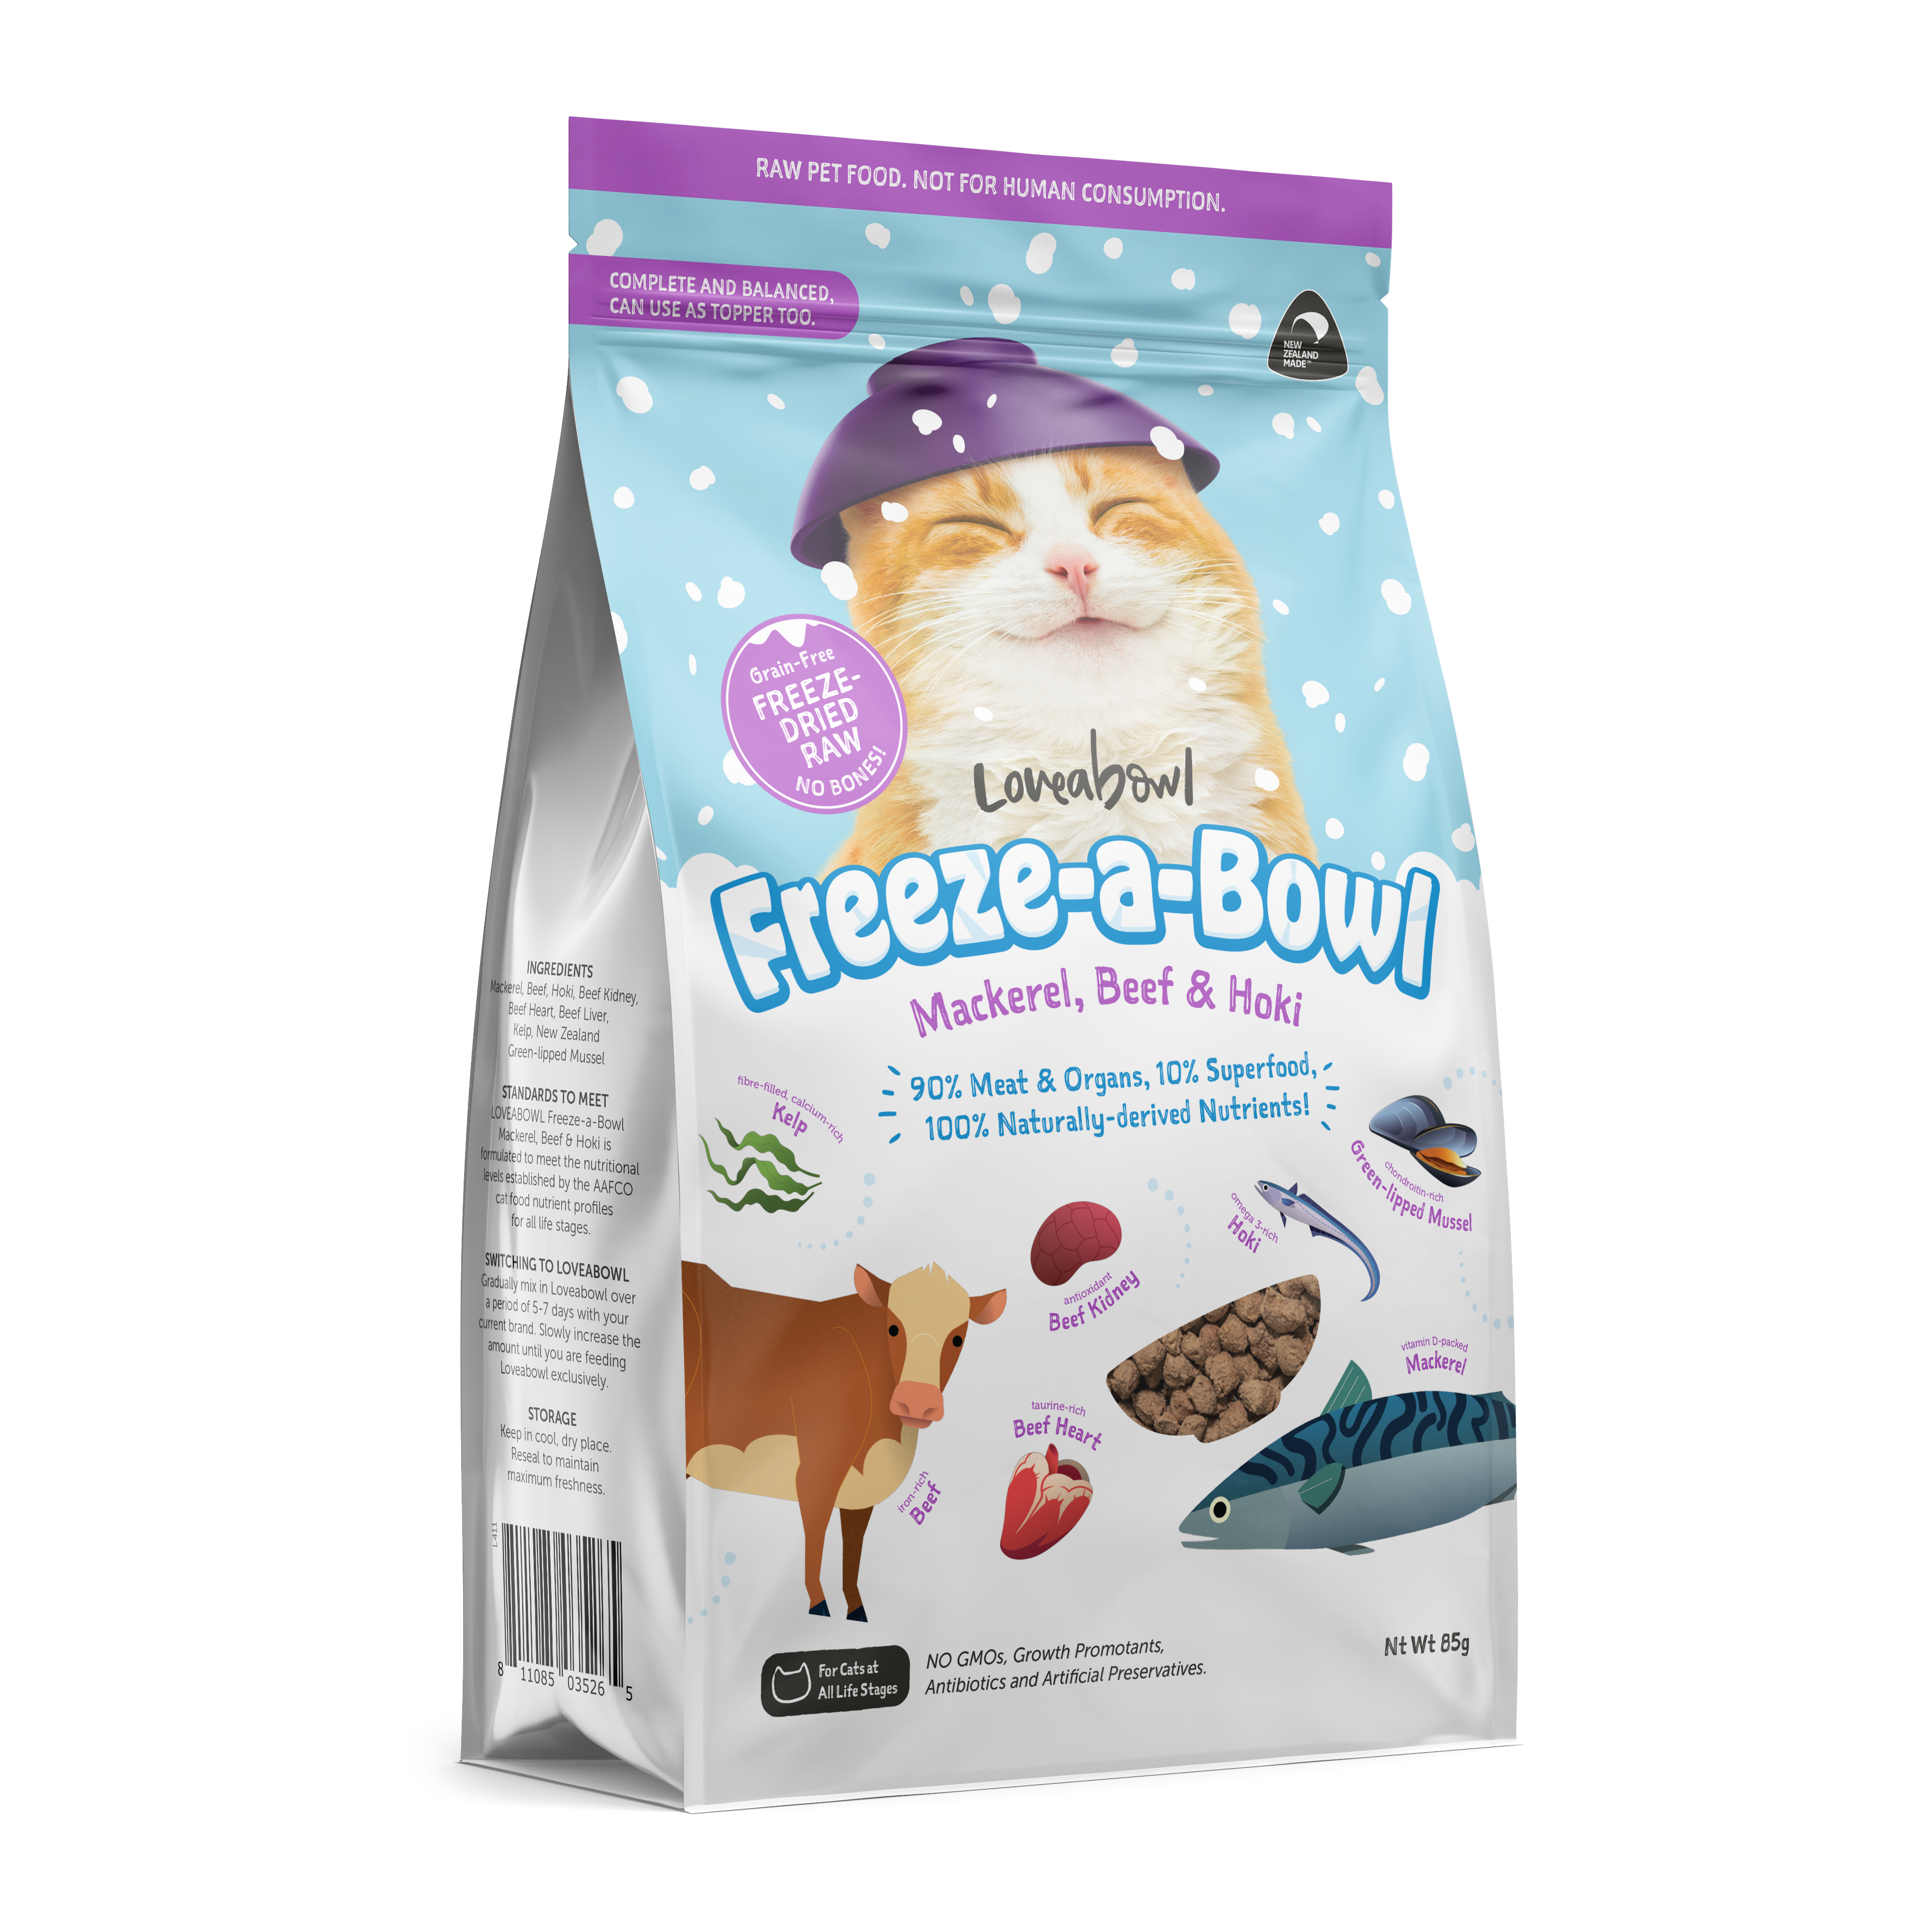 Loveabowl Freeze-a-Bowl Mackerel, Beef & Hoki for Cats